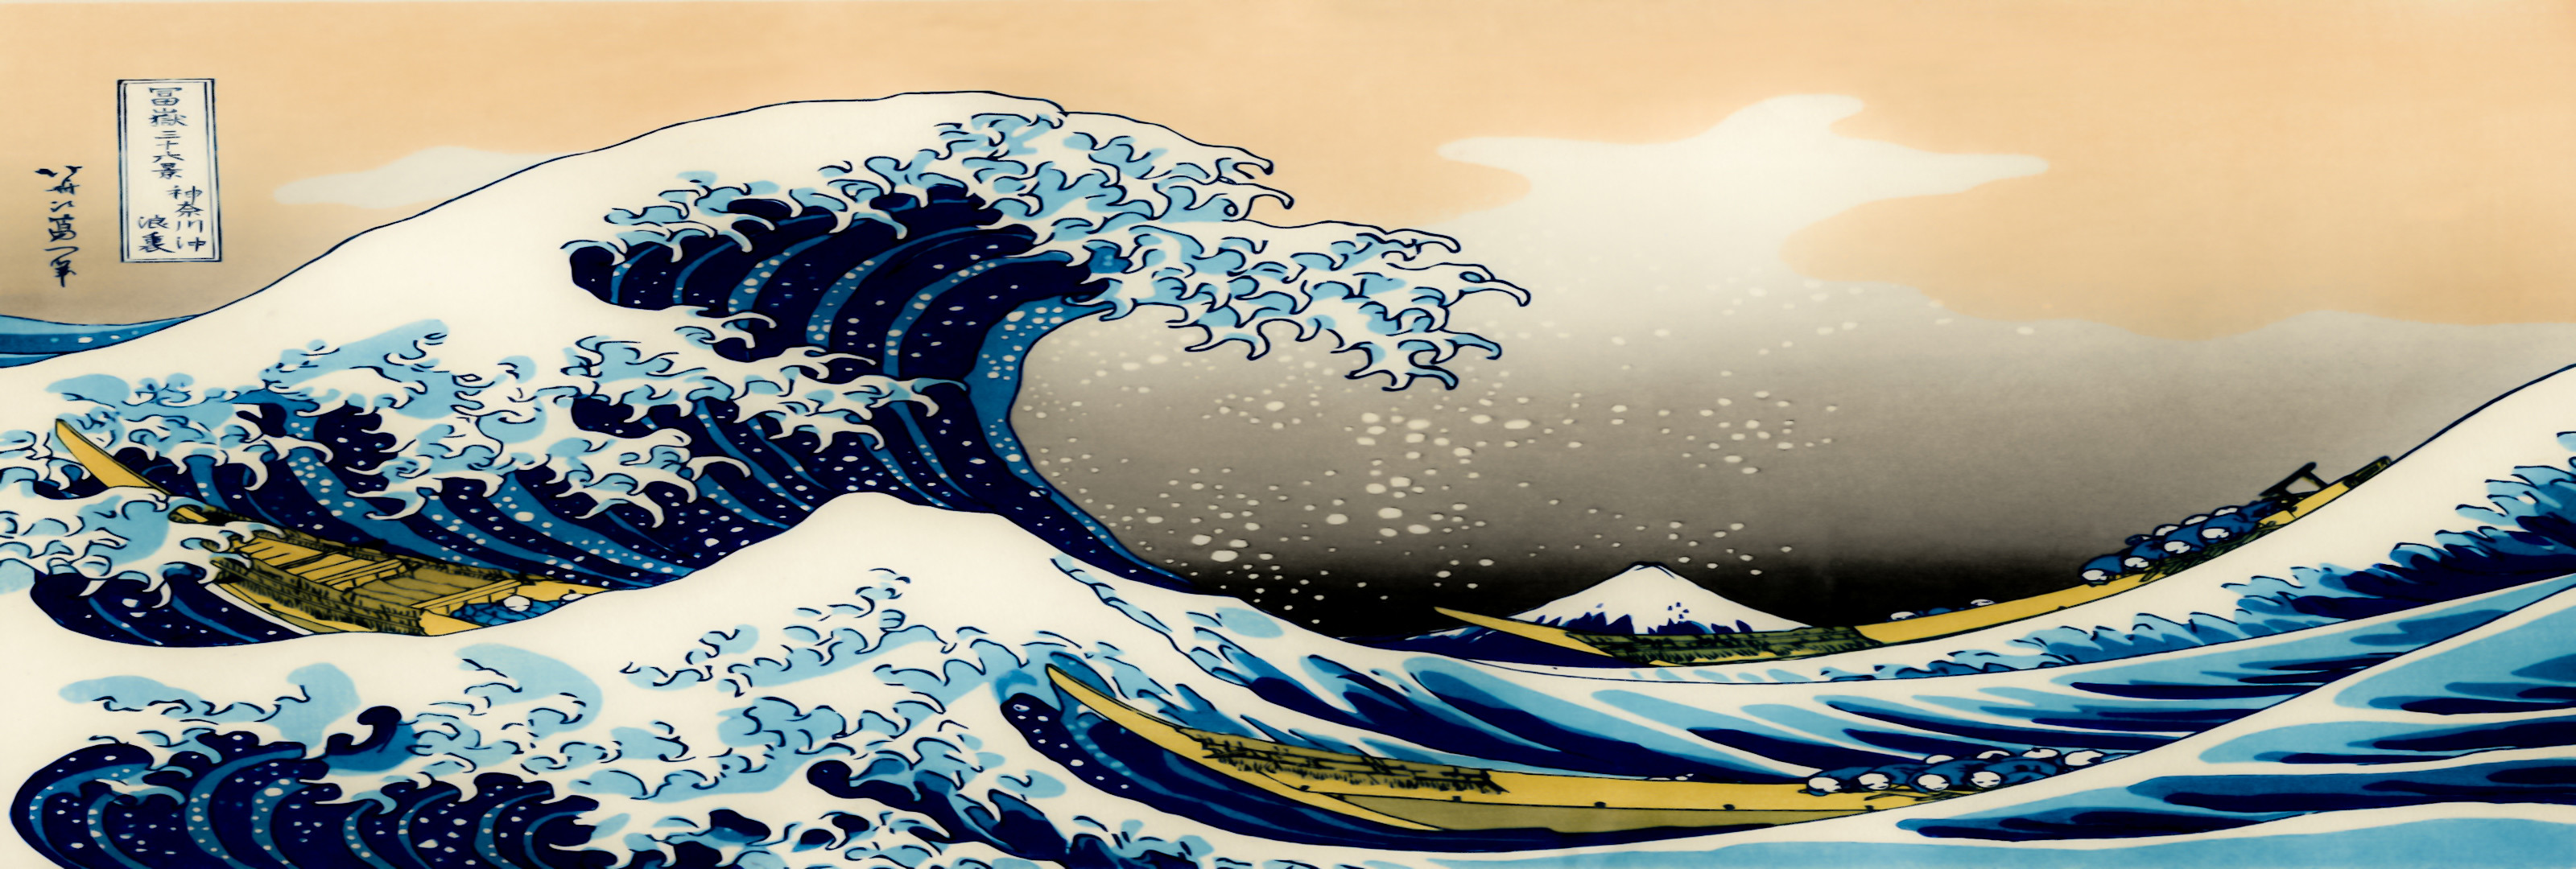 3200x1080 The Great Wave Off Kanagawa Wallpaper